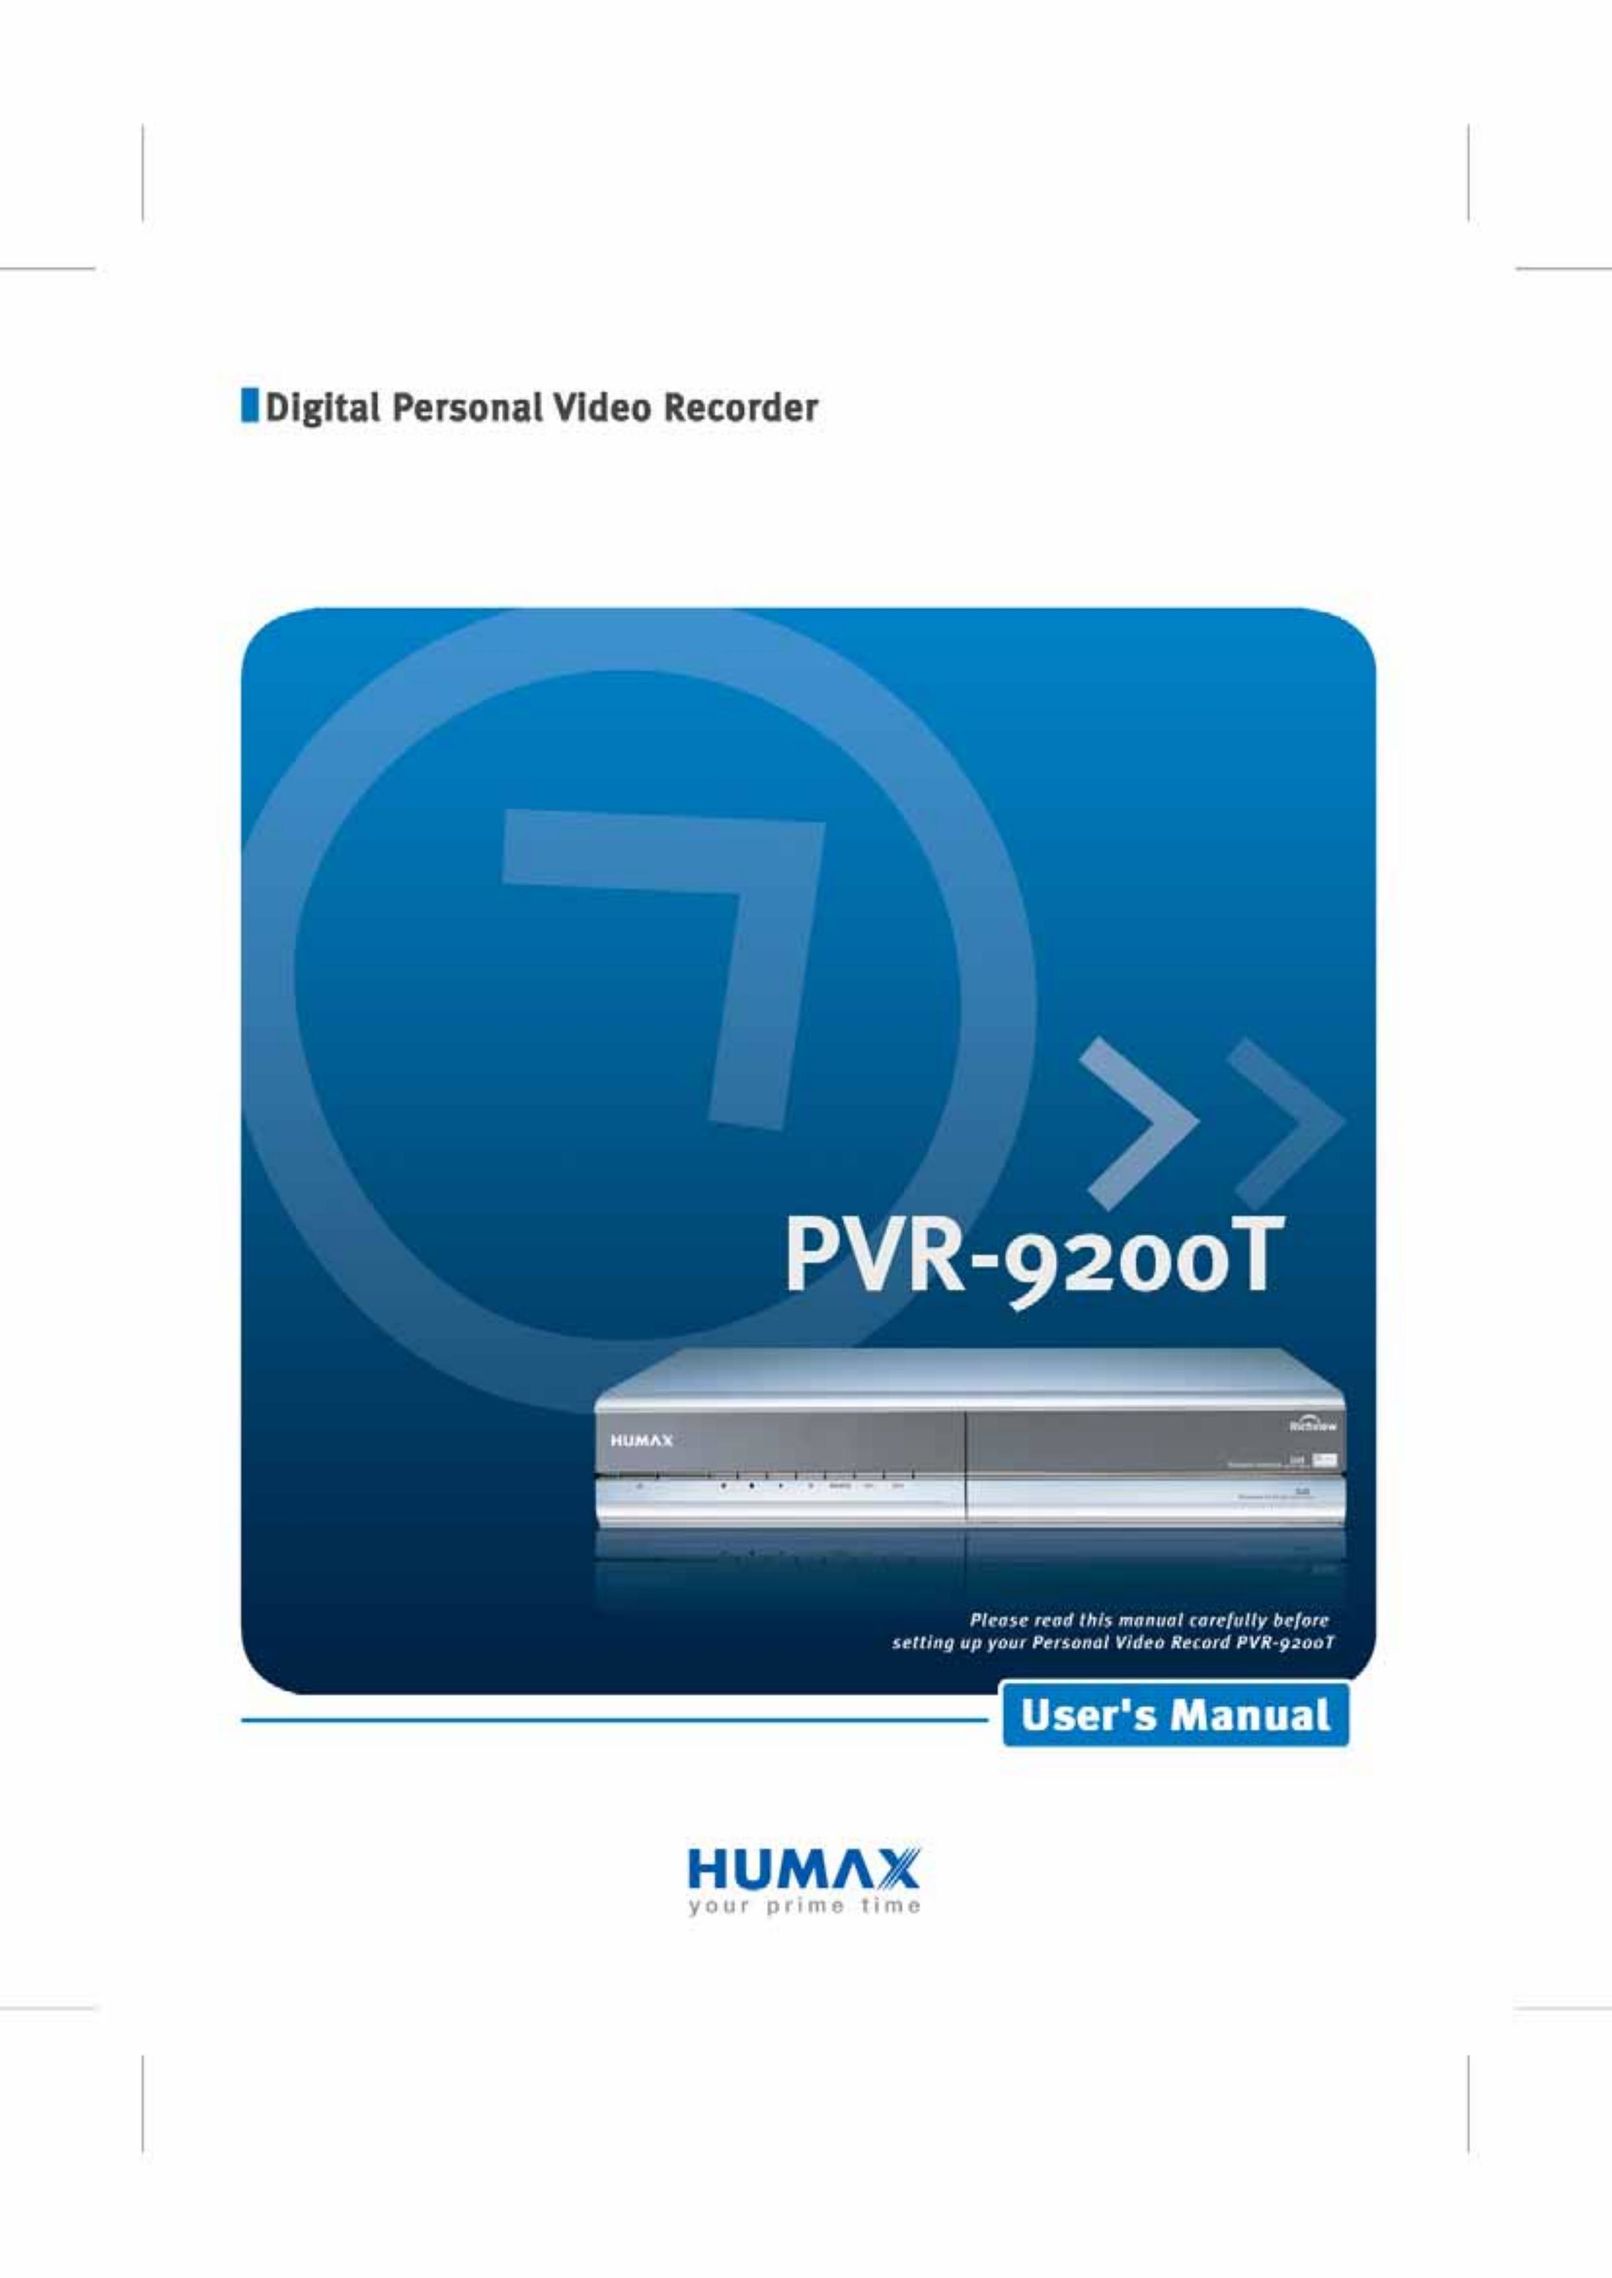 Humax PVR-9200T DVR User Manual